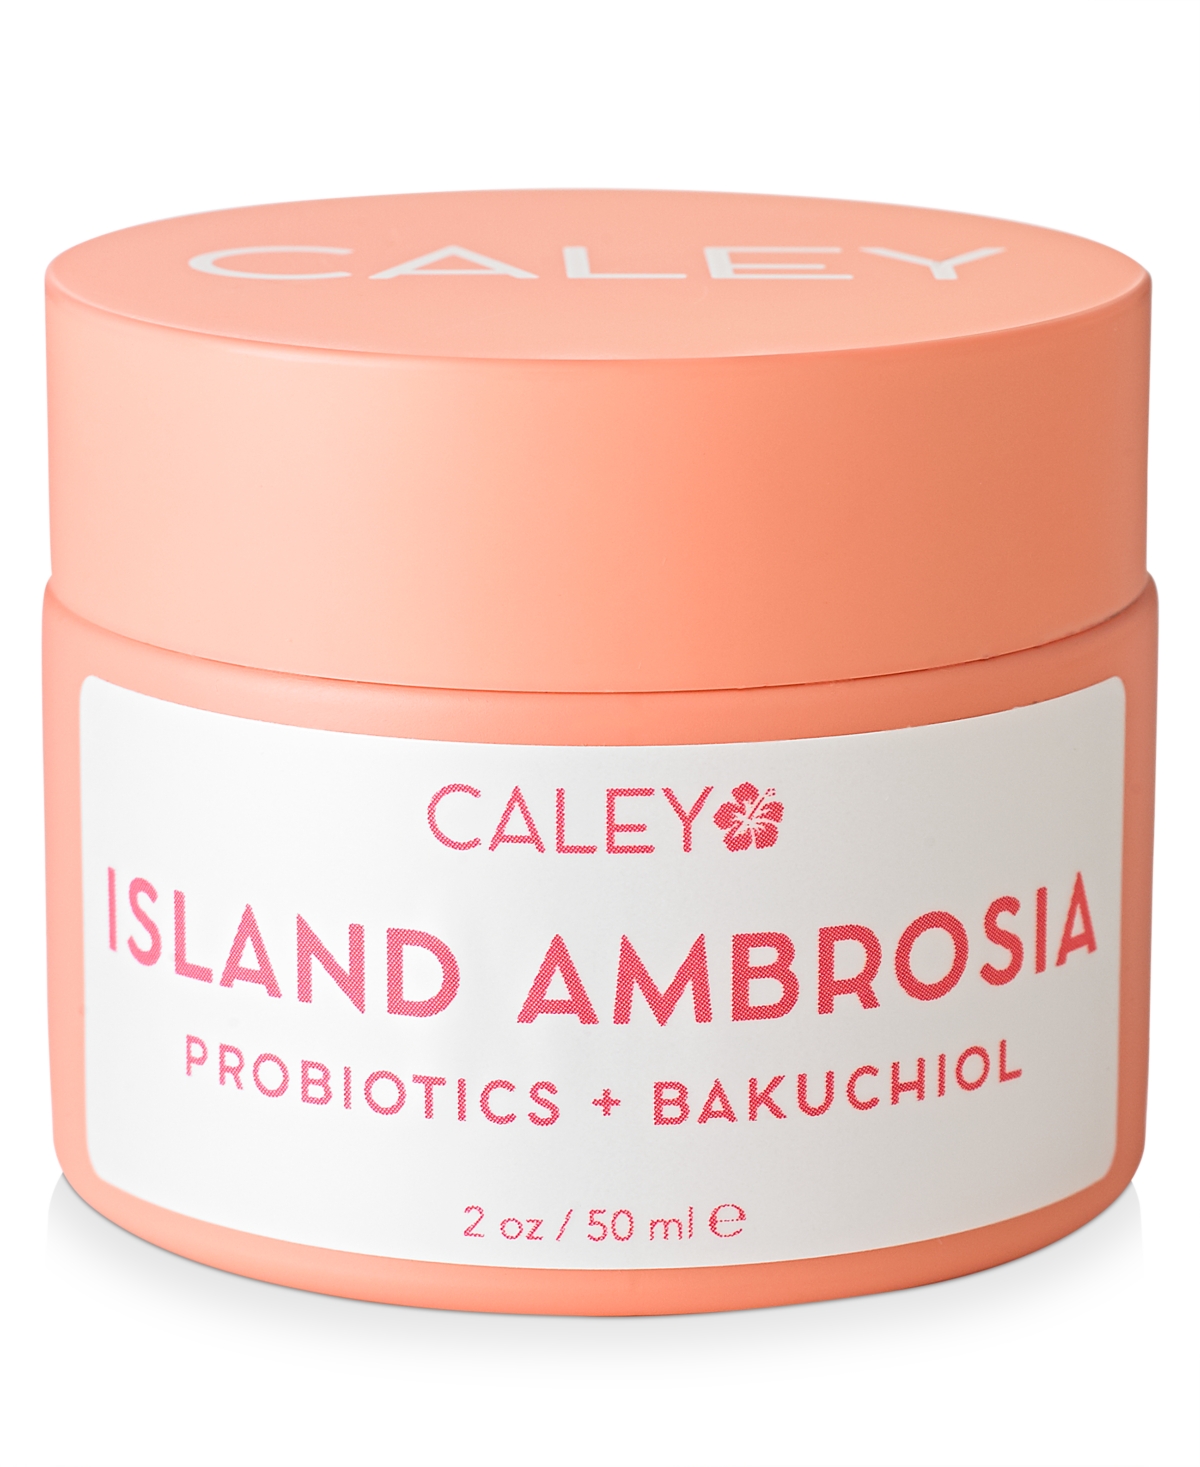 Caley Cosmetics Island Ambrosia Bakuchiol Moisturizer